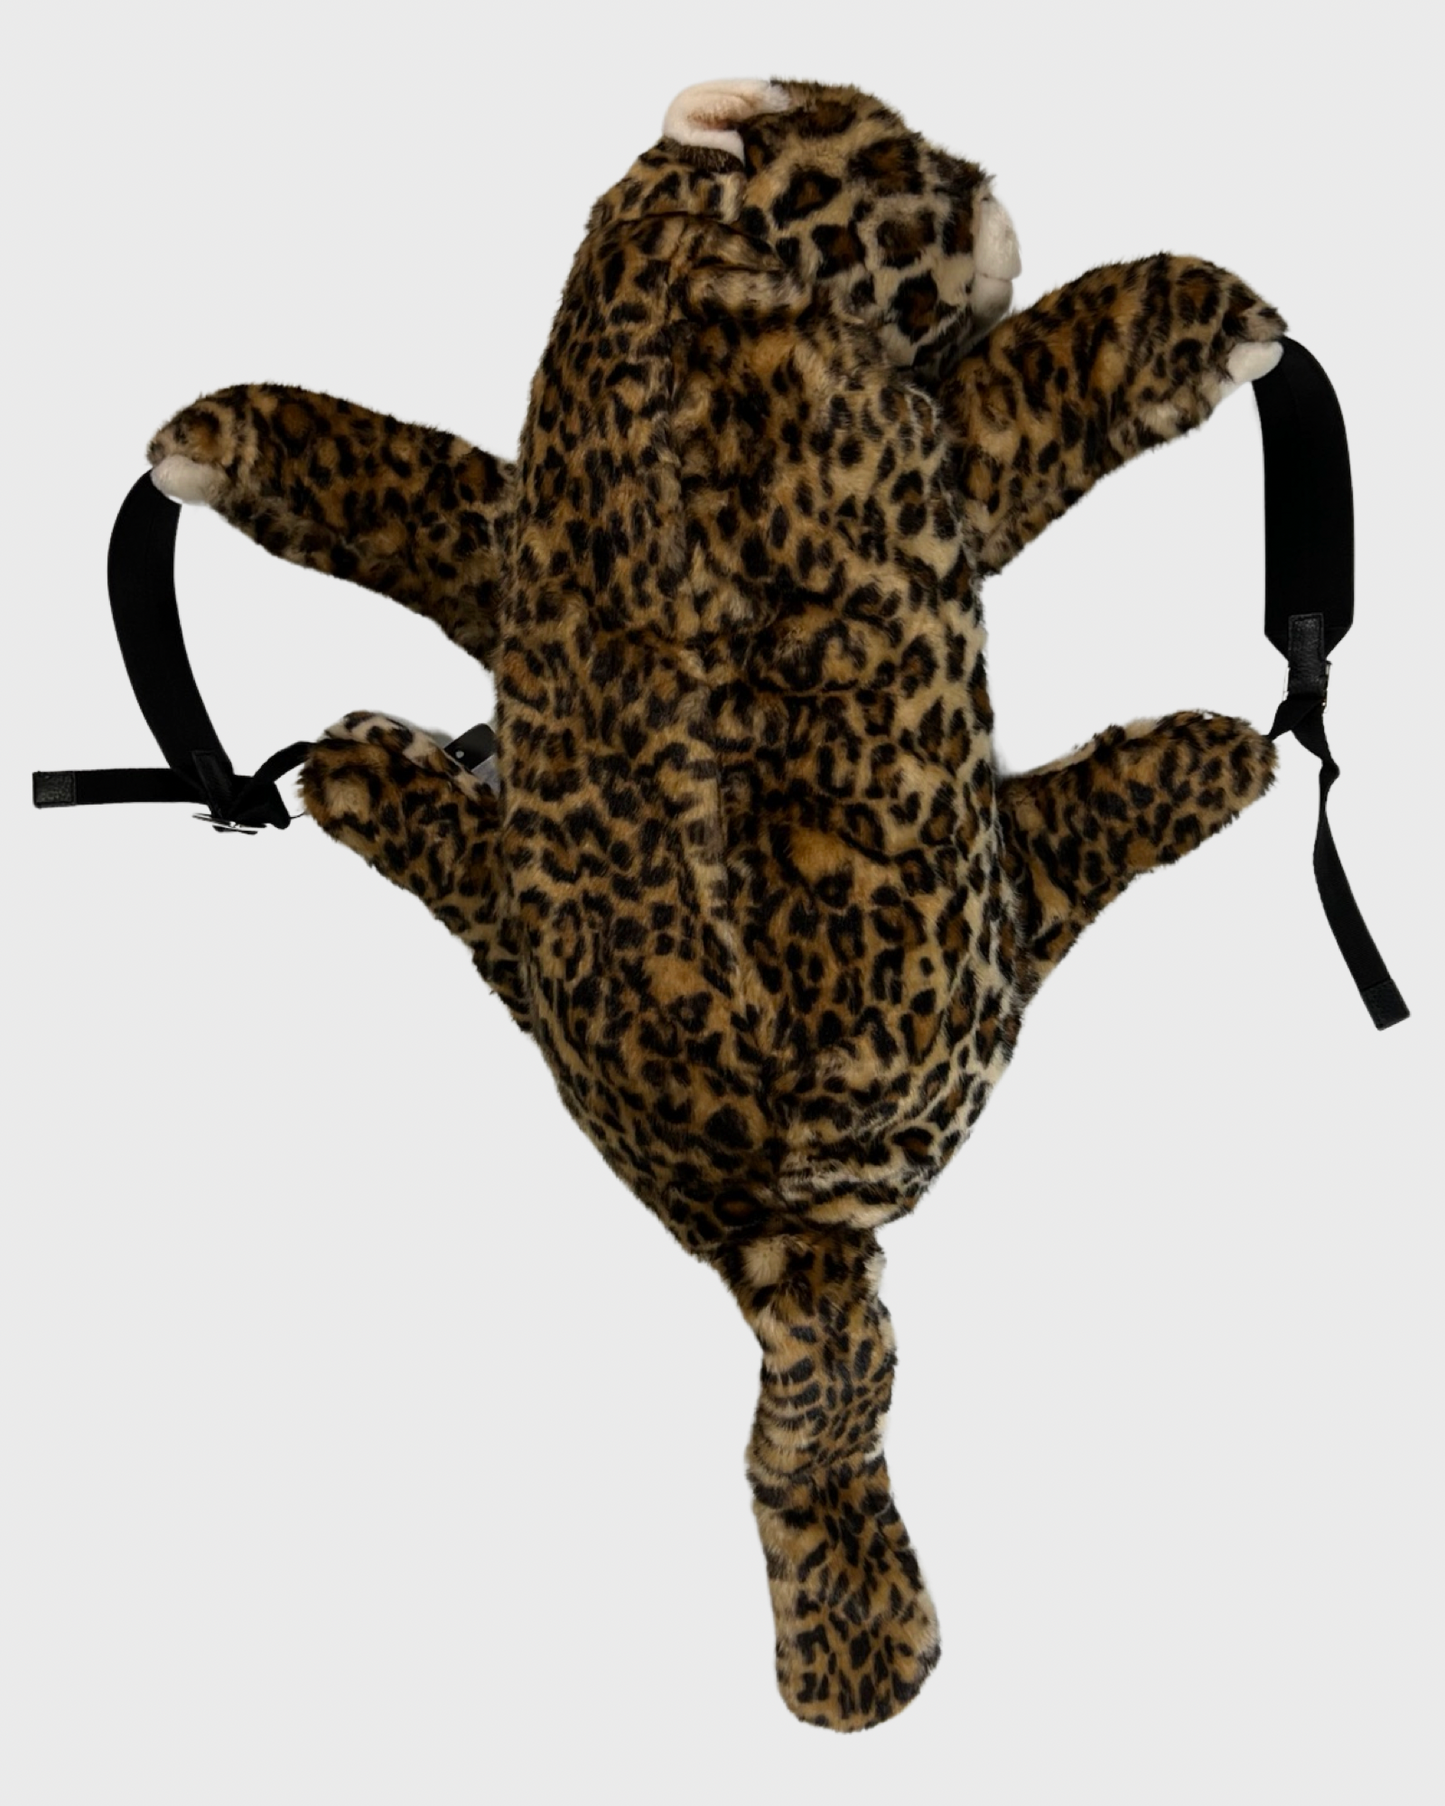 Dolce & Gabbana AW17 Large Cheetah Backpack SZ:OS